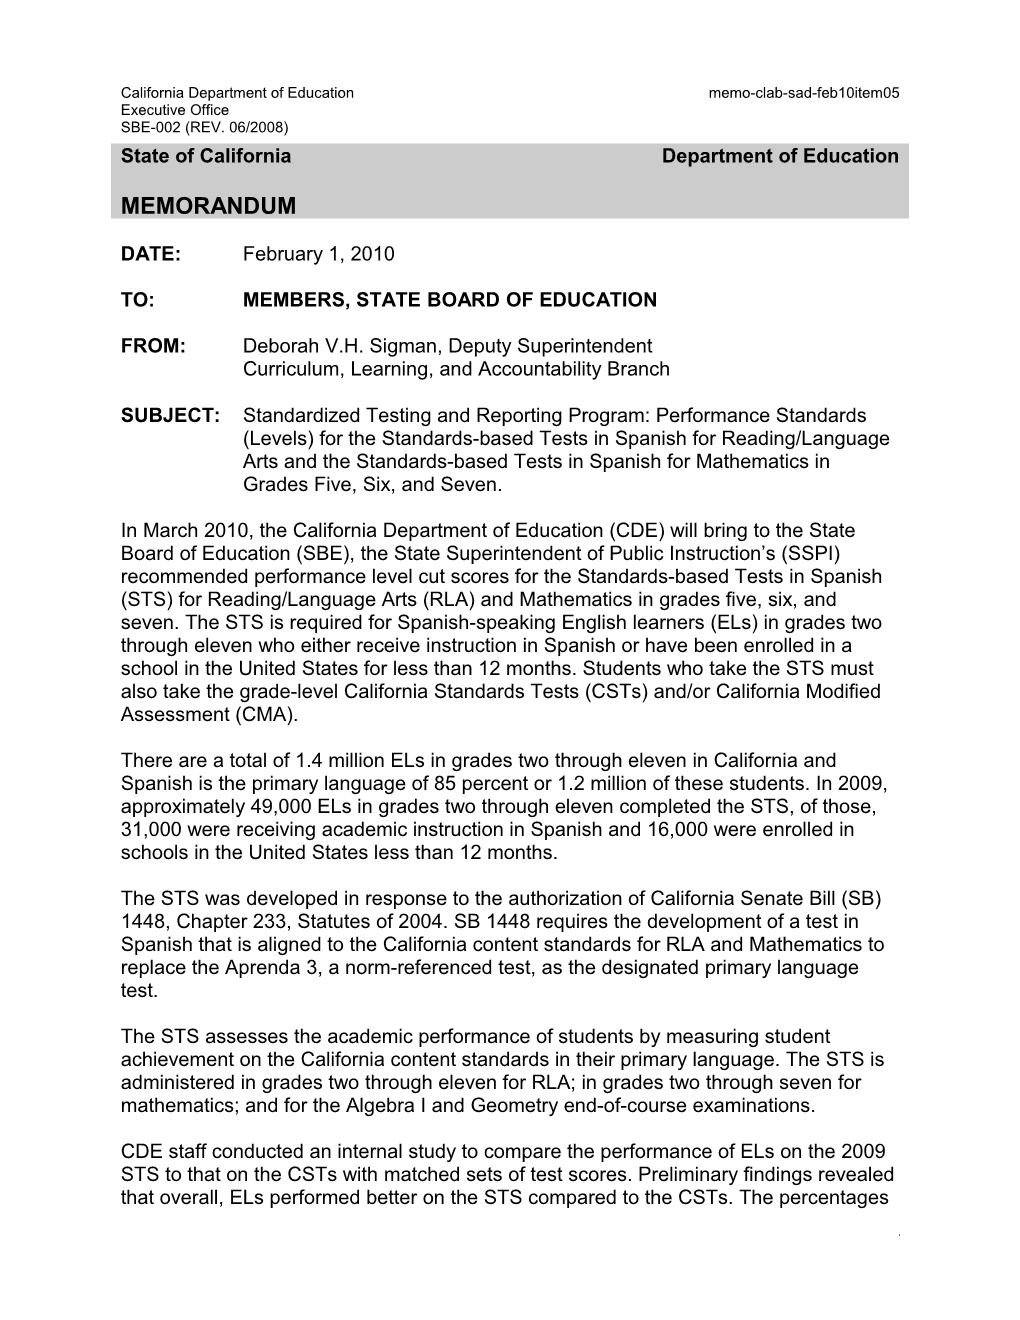 February 2010 CLAB Item 05 - Information Memorandum (CA State Board of Education)